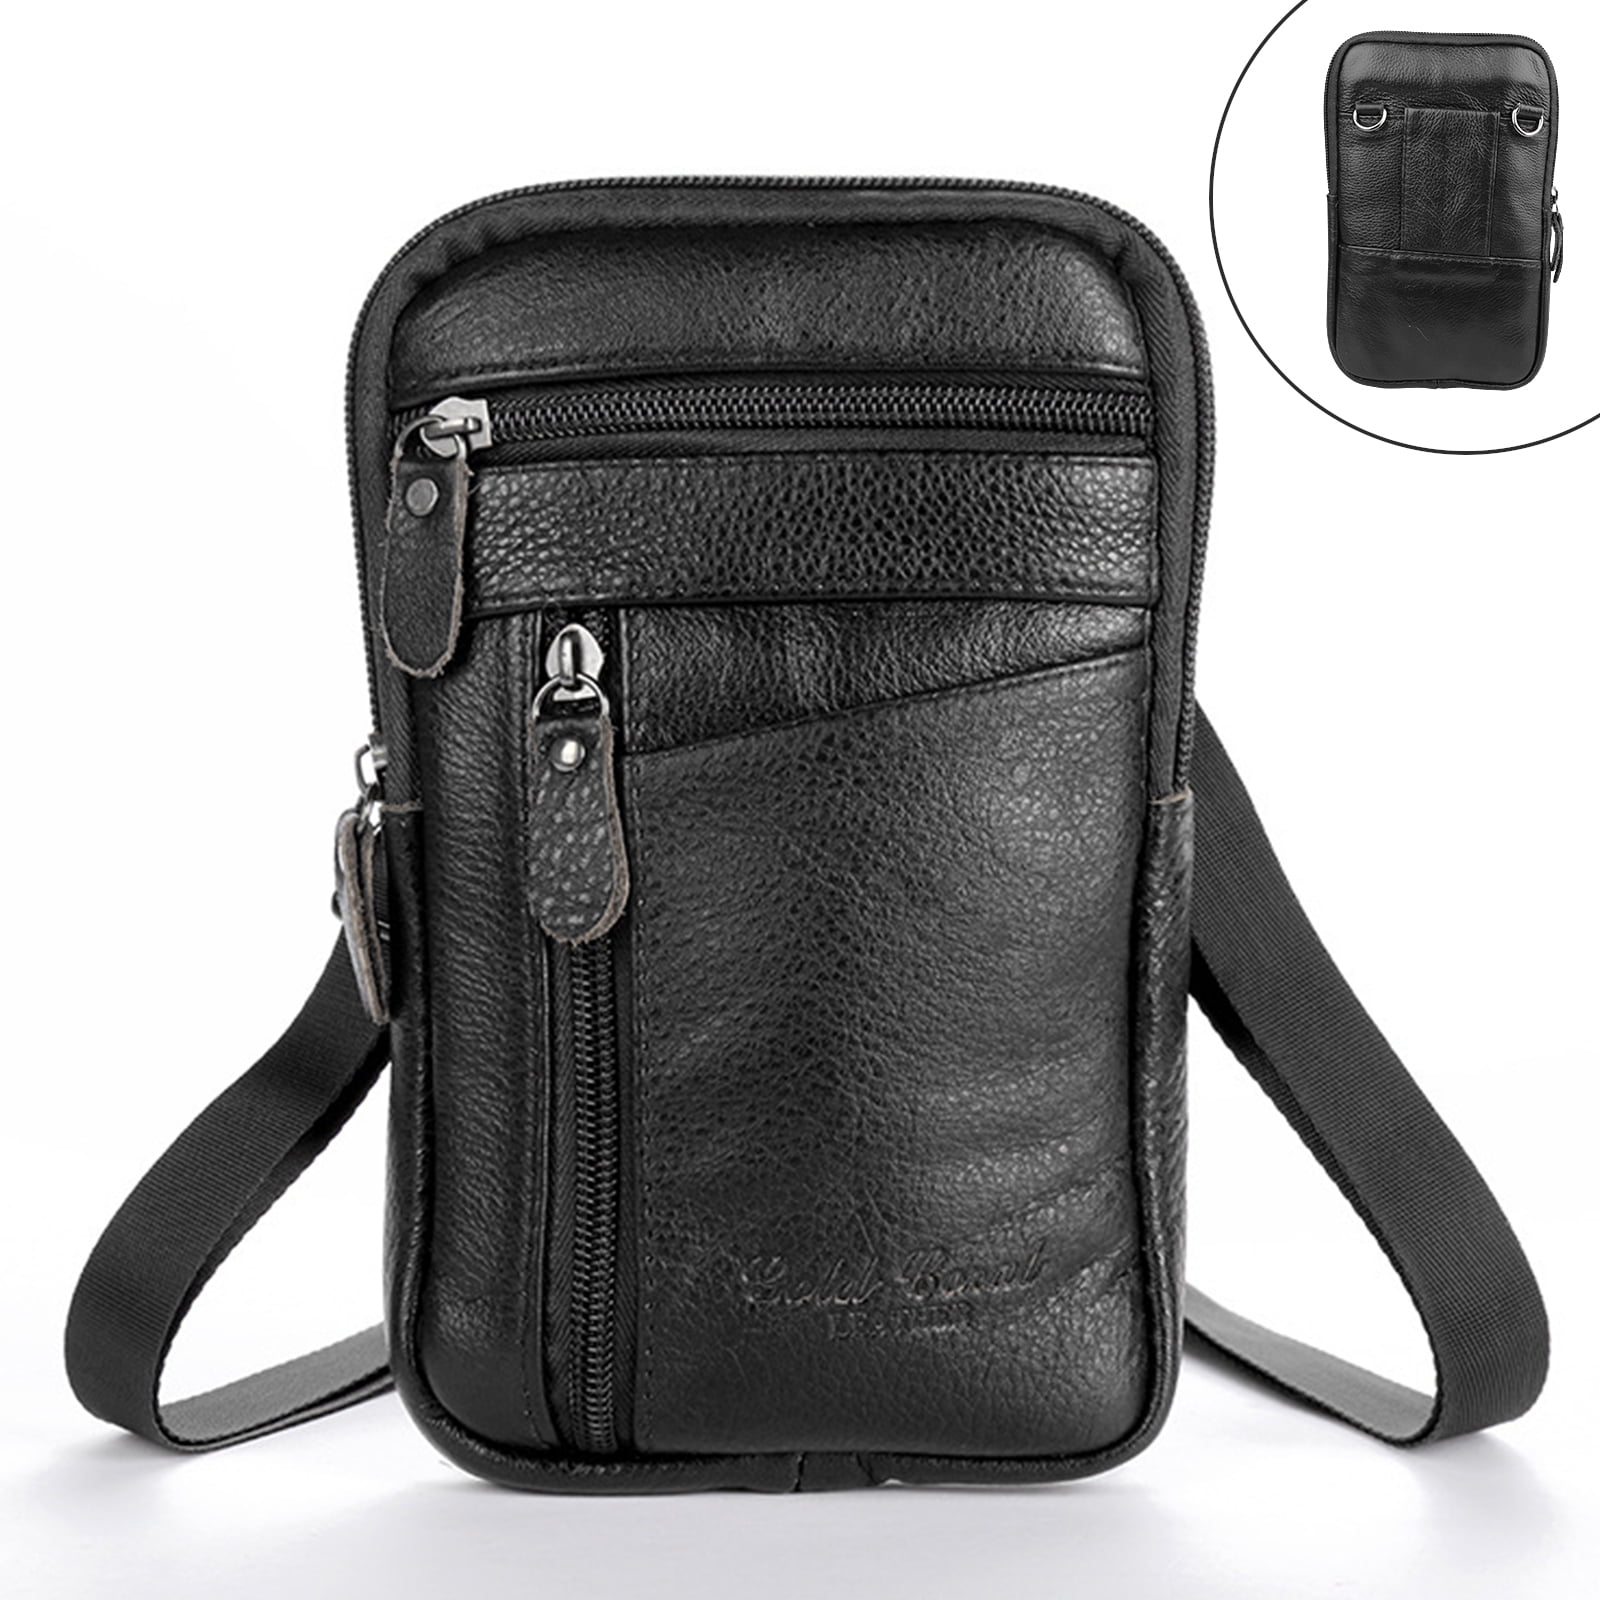 Small Black Hip bag Zip Pocket-Purse-Cross body-long strap-Phone-cash-tickets 